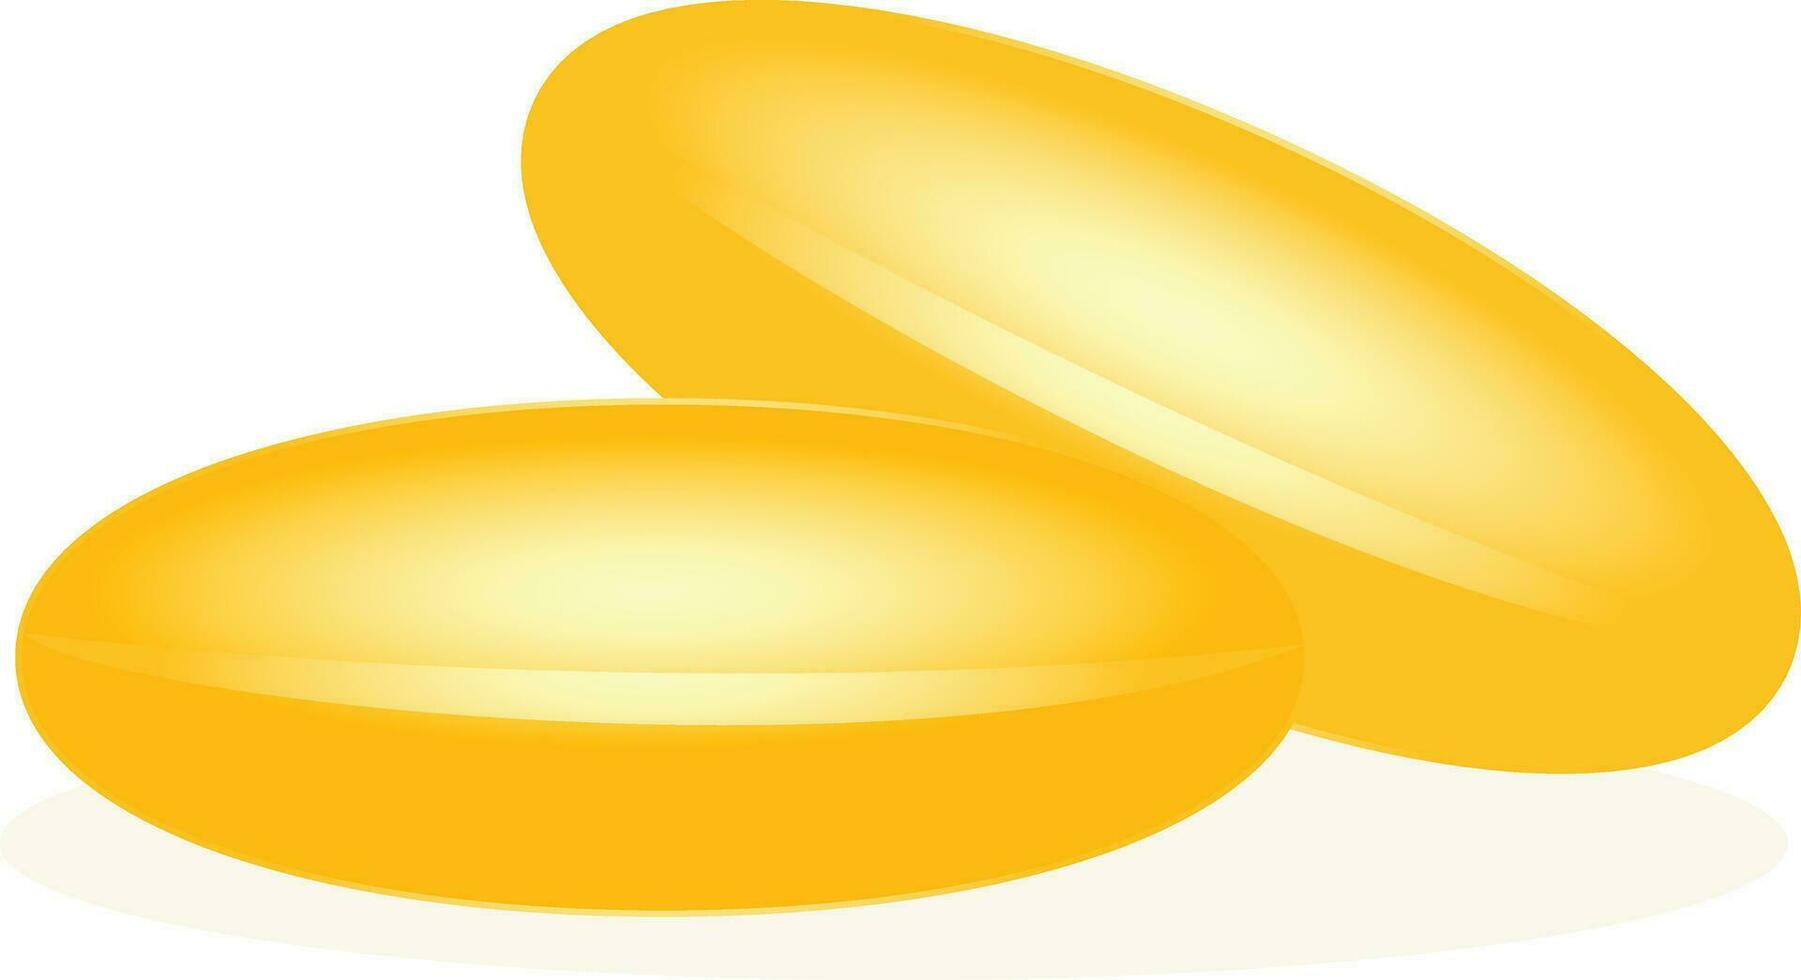 omega 3 6 6 9 9 pescado petróleo cápsula pastillas vector ilustración, omega vitamina krill petróleo pastillas valores vector imagen